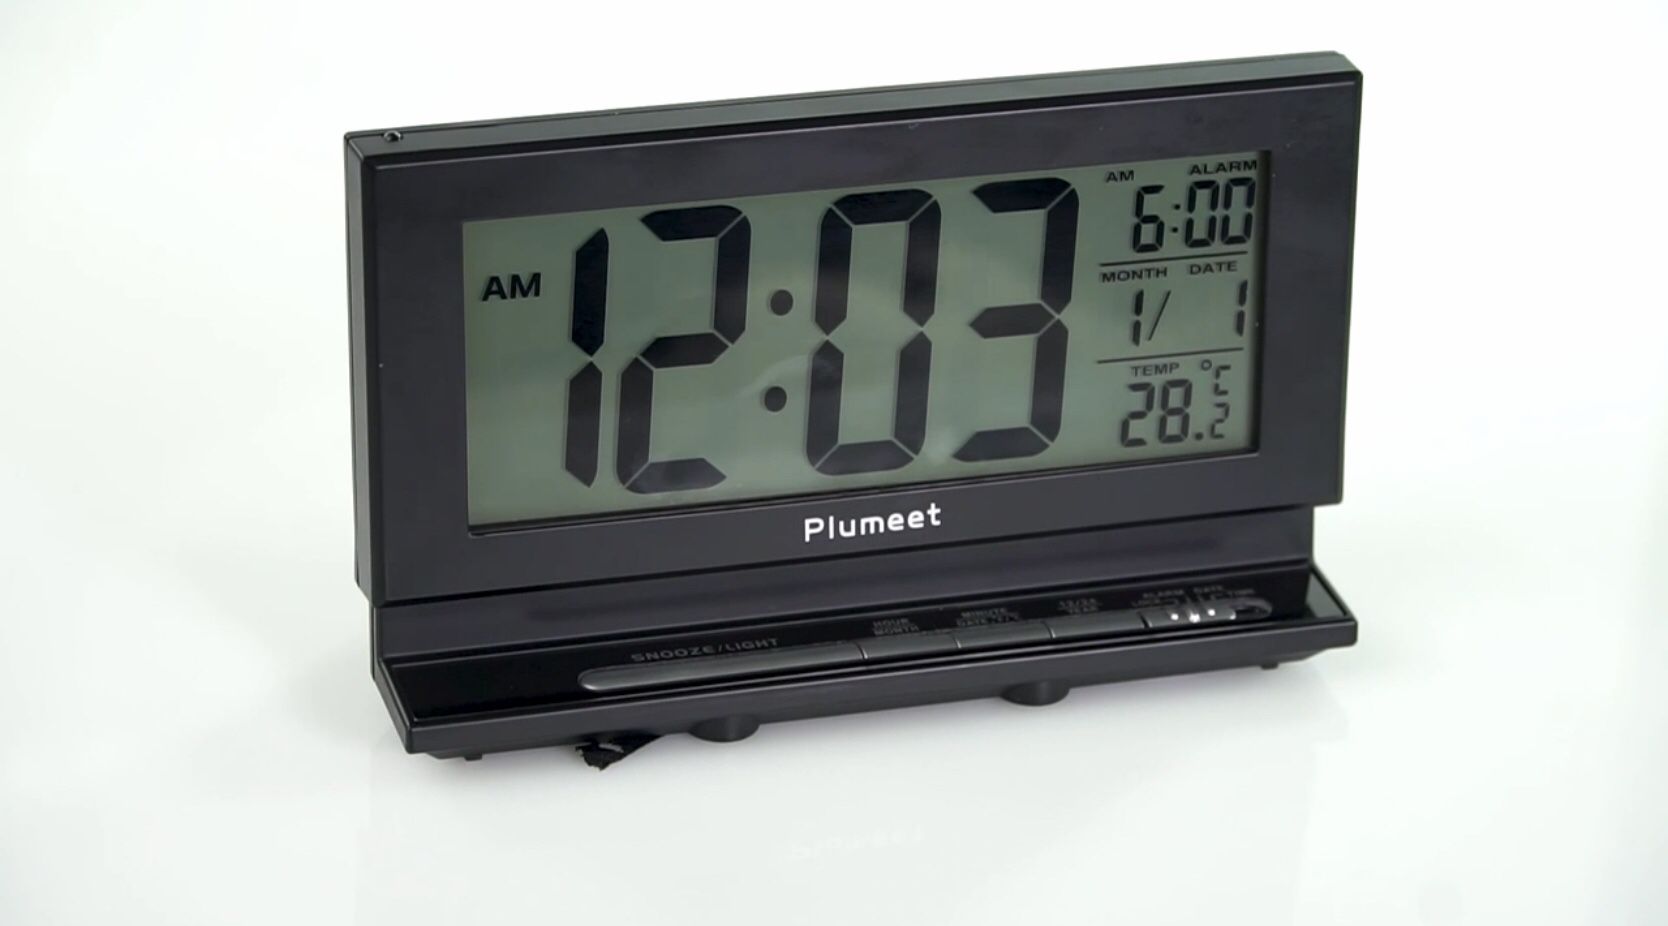 Plumeet Digital Alarm Clock